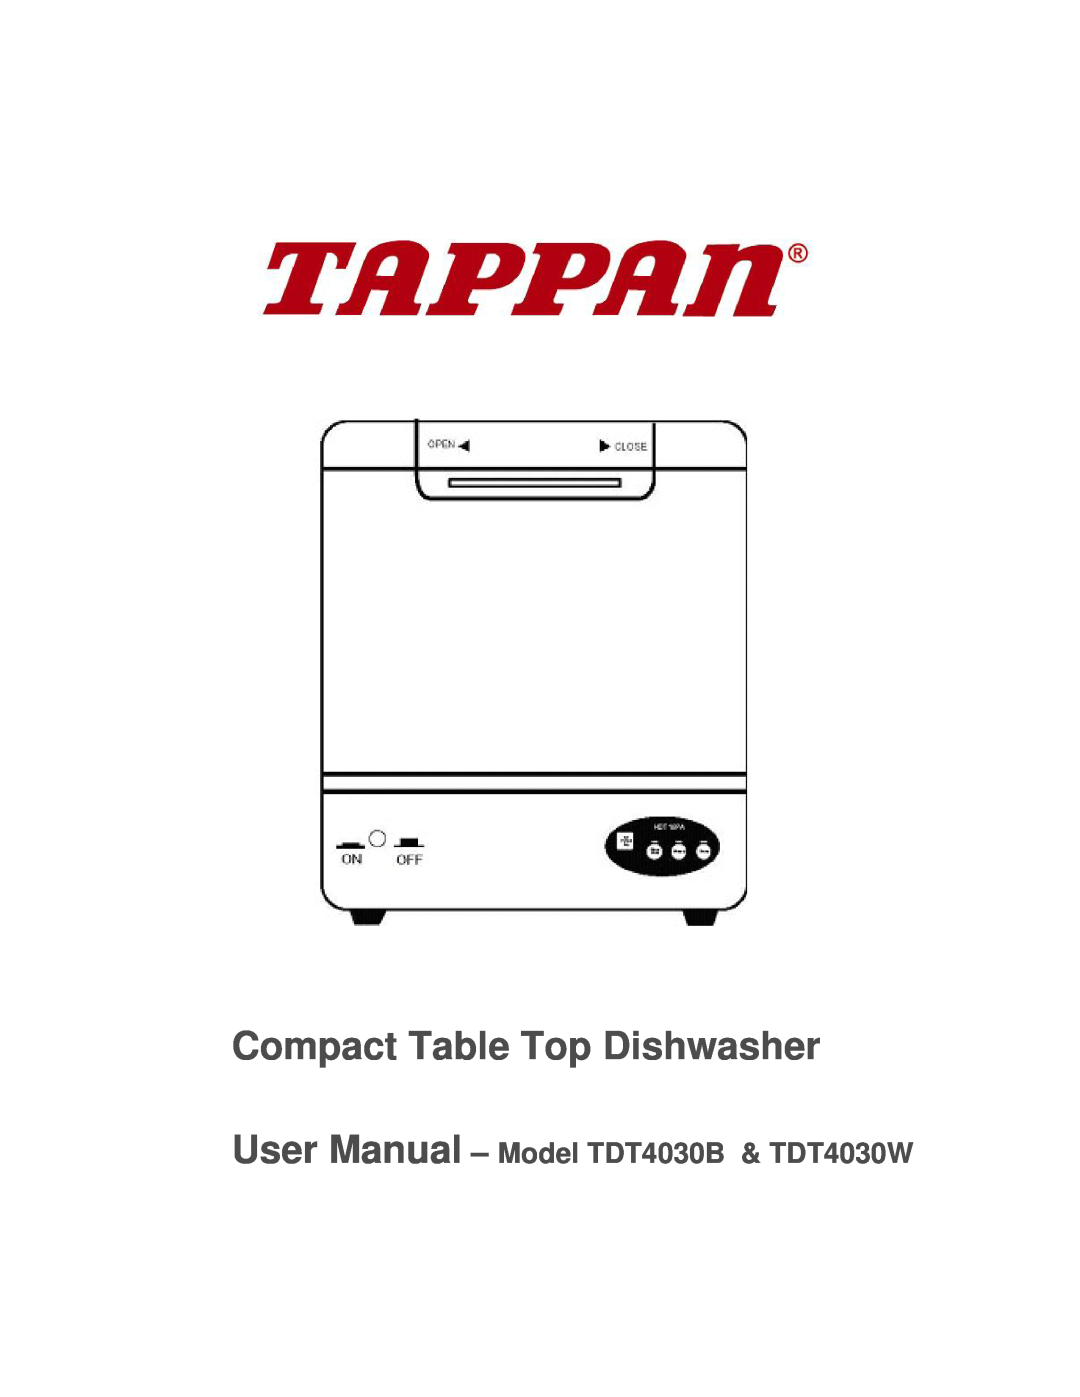 Tappan user manual Compact Table Top Dishwasher, User Manual - Model TDT4030B & TDT4030W 